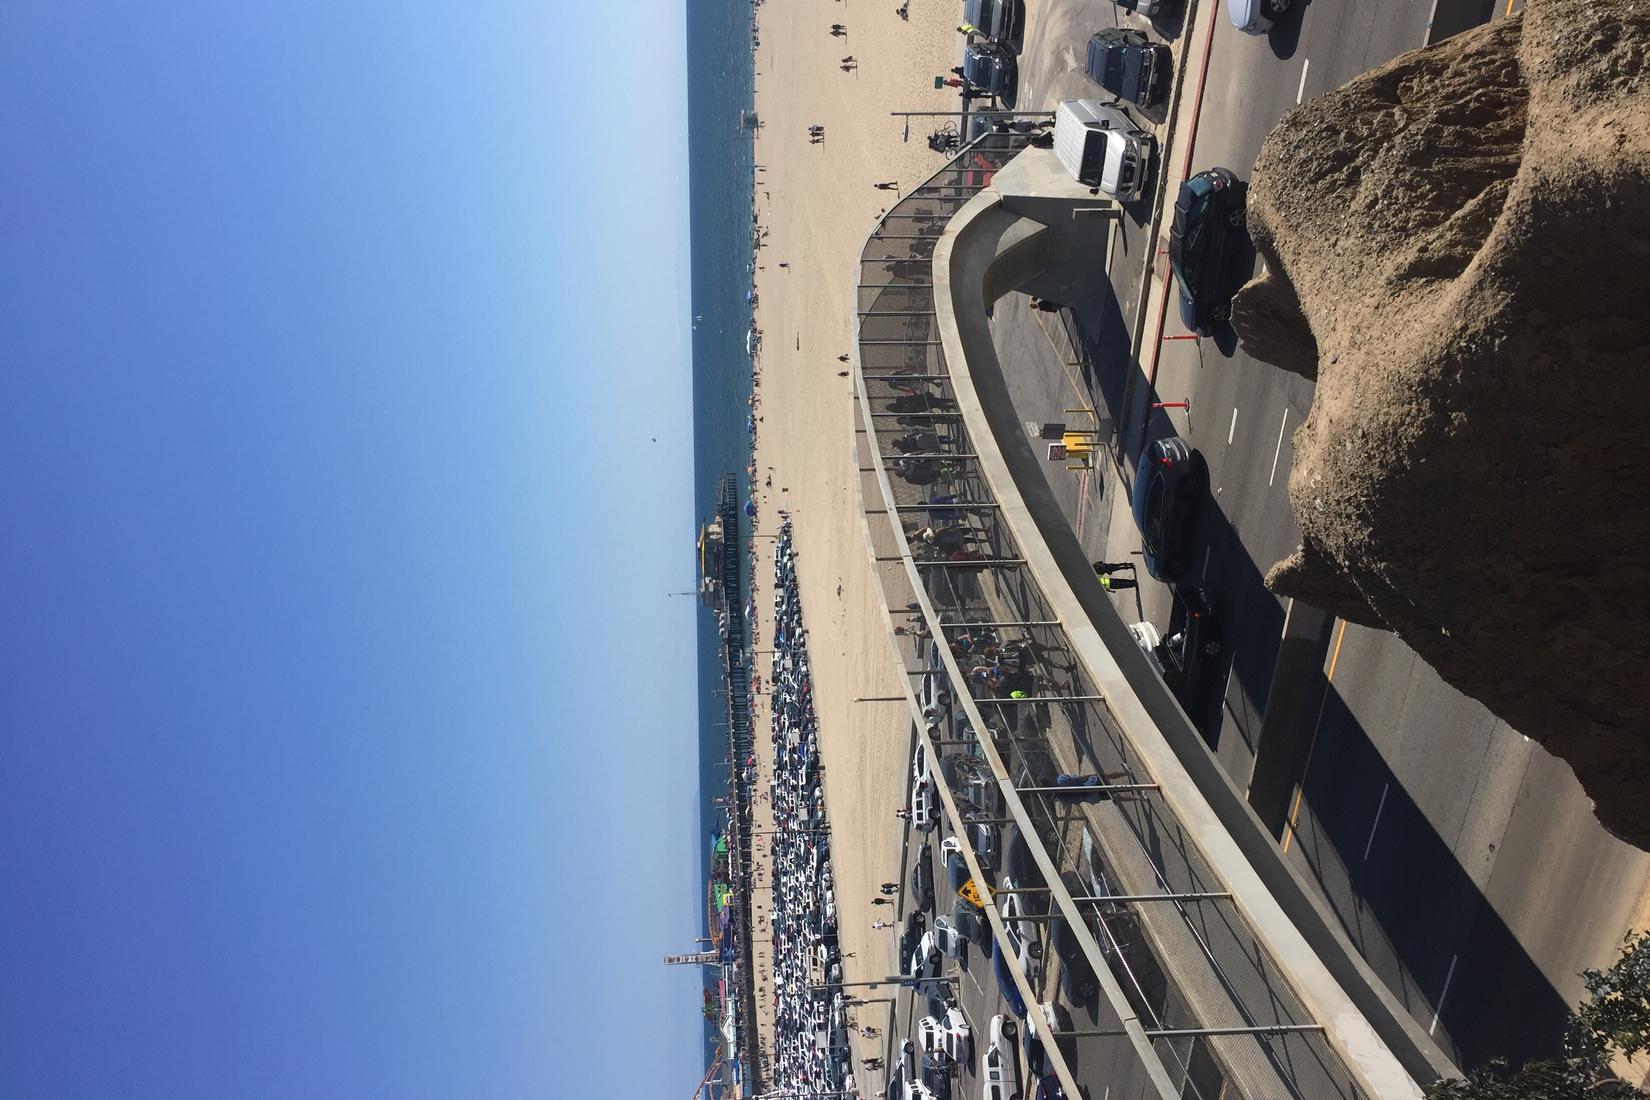 Sandee - Santa Monica Pier Beach